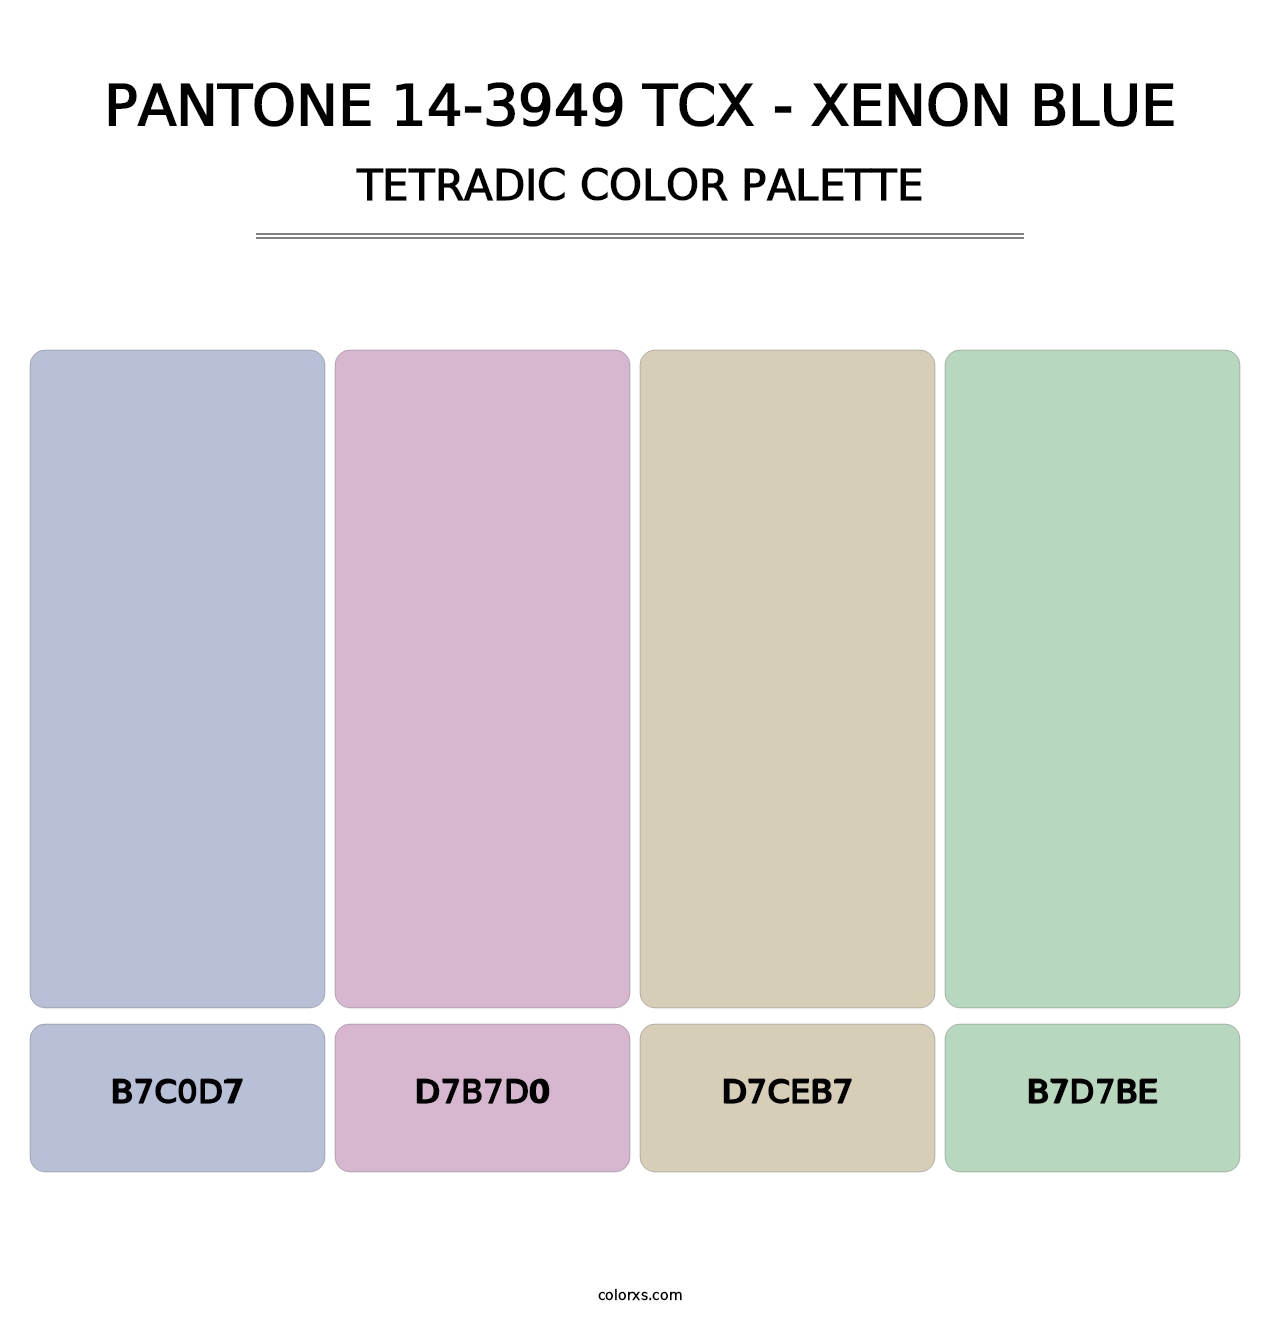 PANTONE 14-3949 TCX - Xenon Blue - Tetradic Color Palette